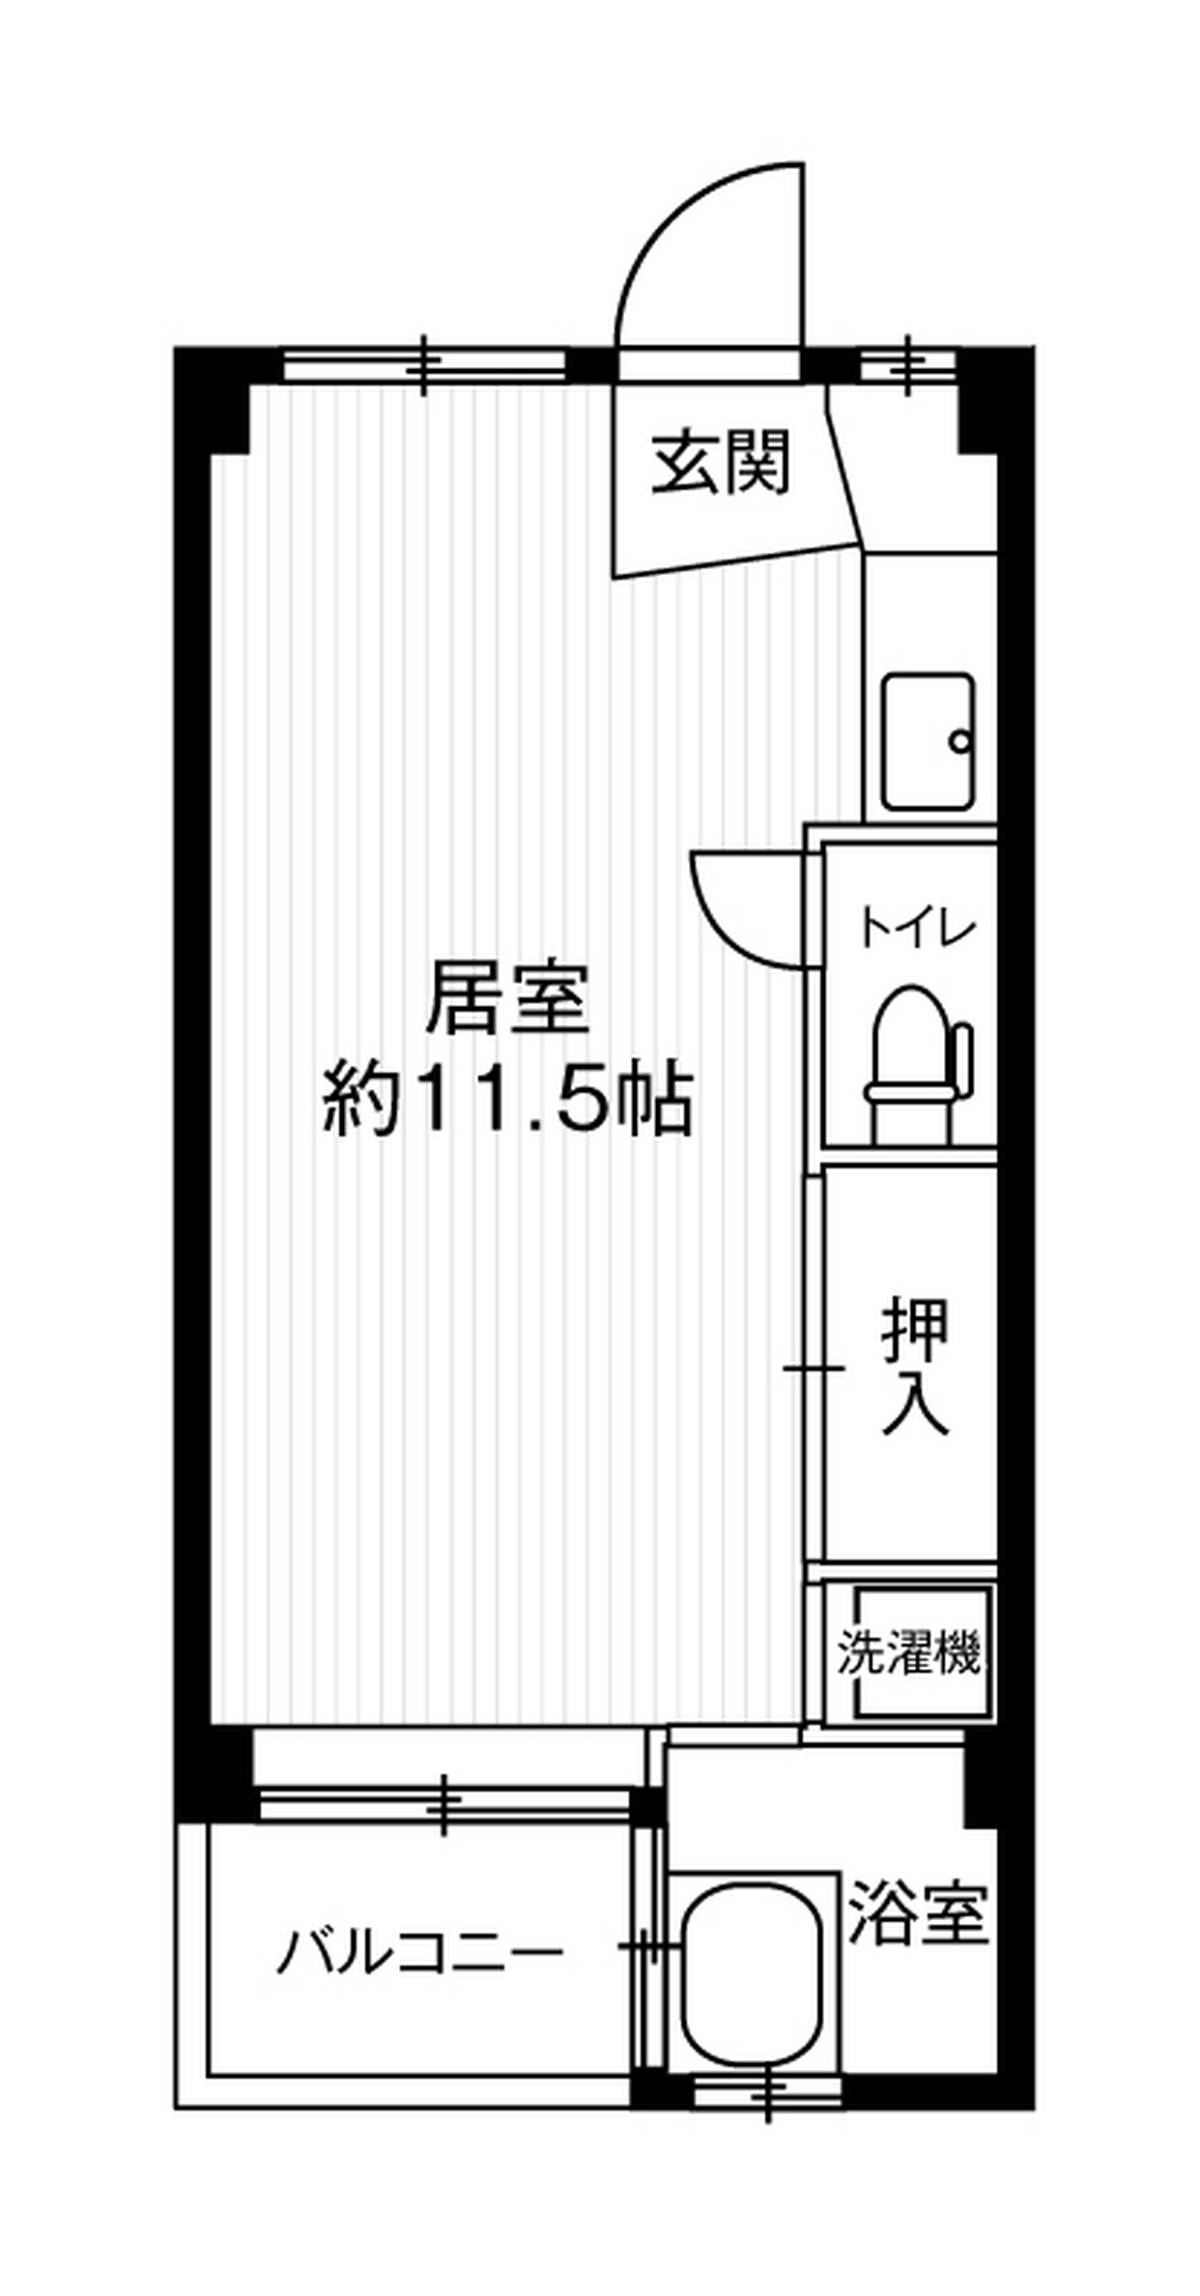 1R floorplan of Village House Kuzunoha in Izumi-shi